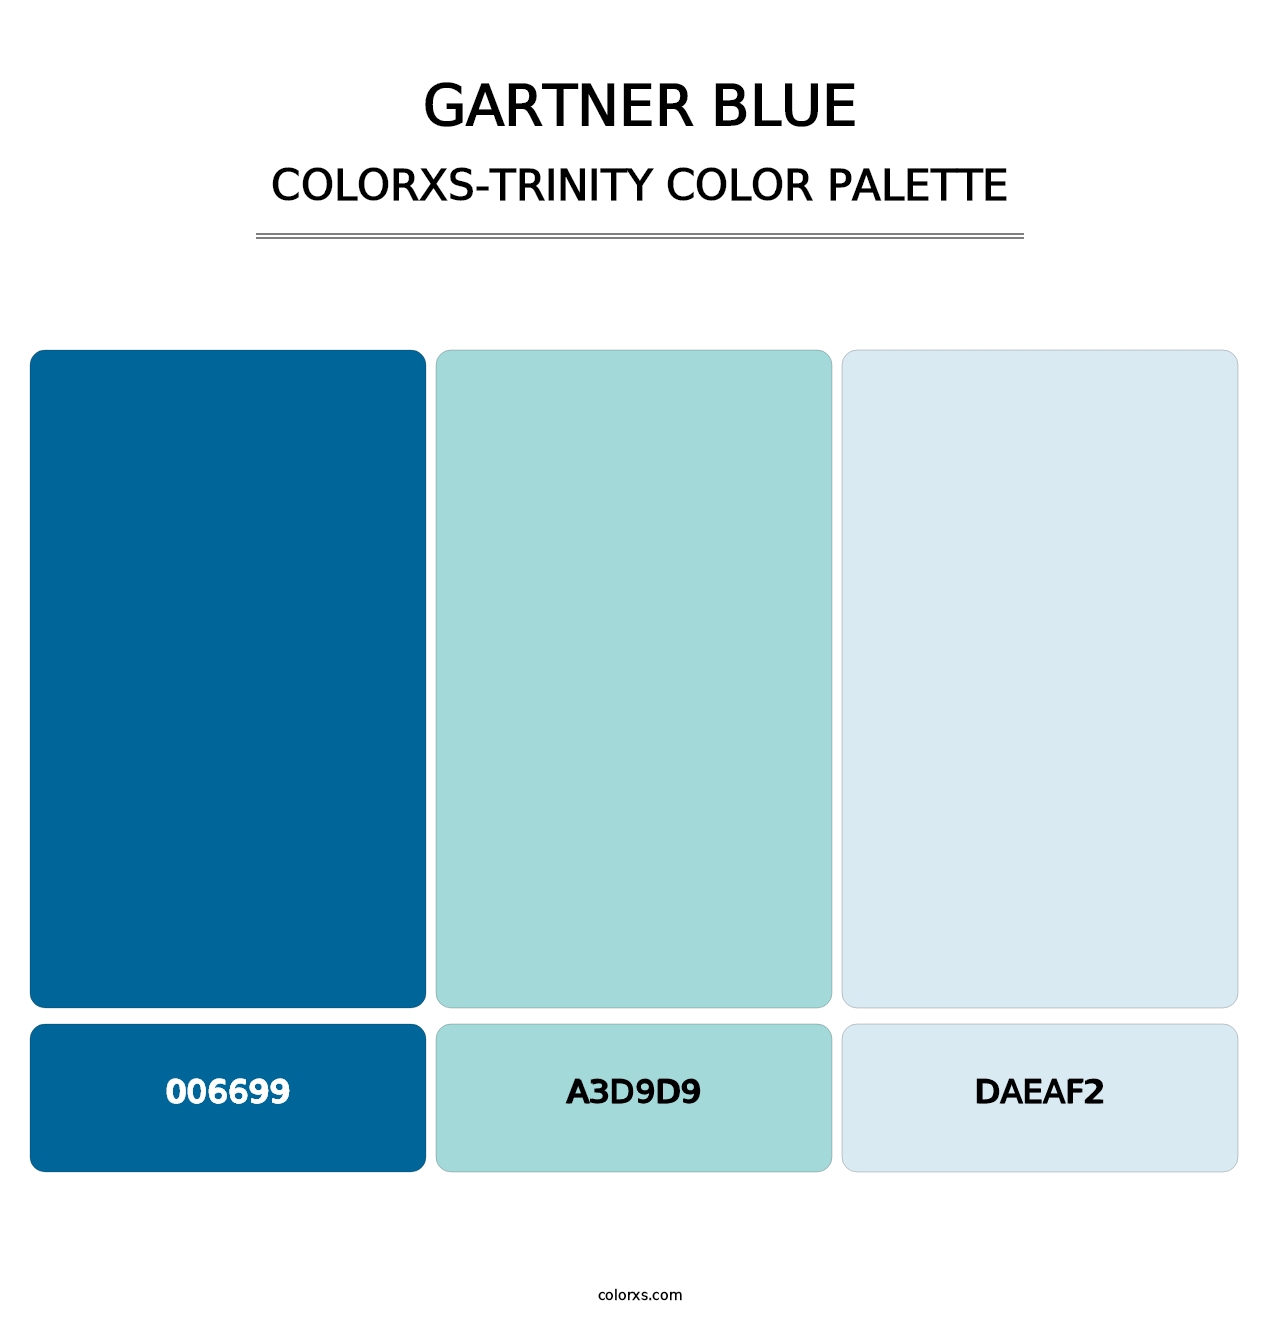 Gartner Blue - Colorxs Trinity Palette